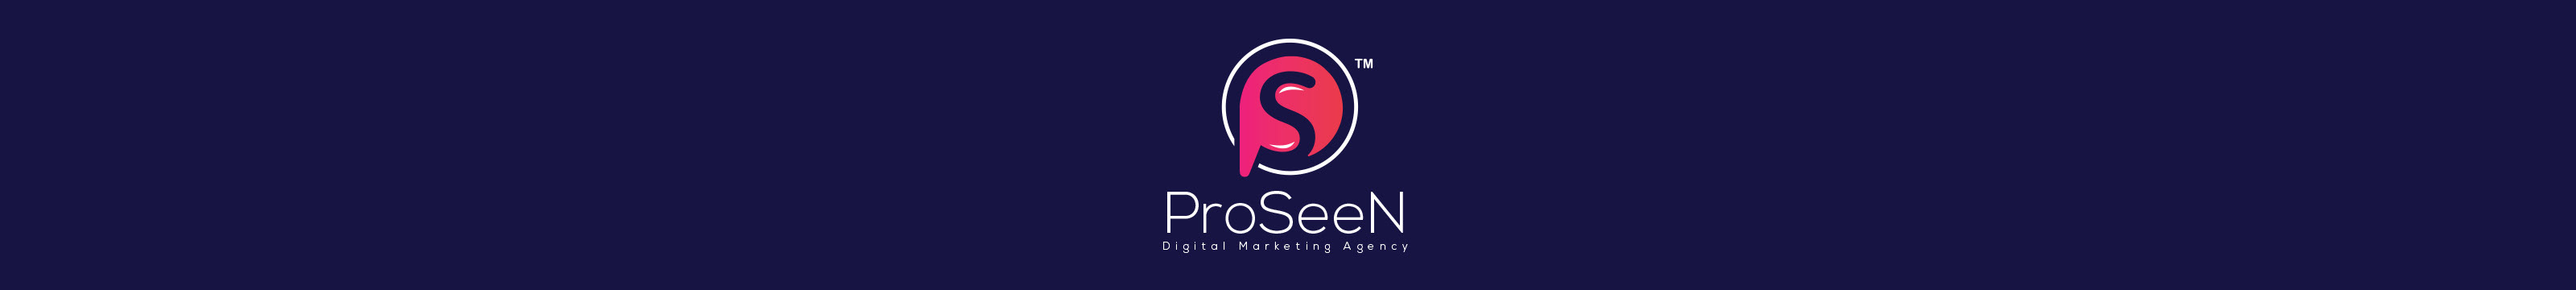 Pro SeeN's profile banner